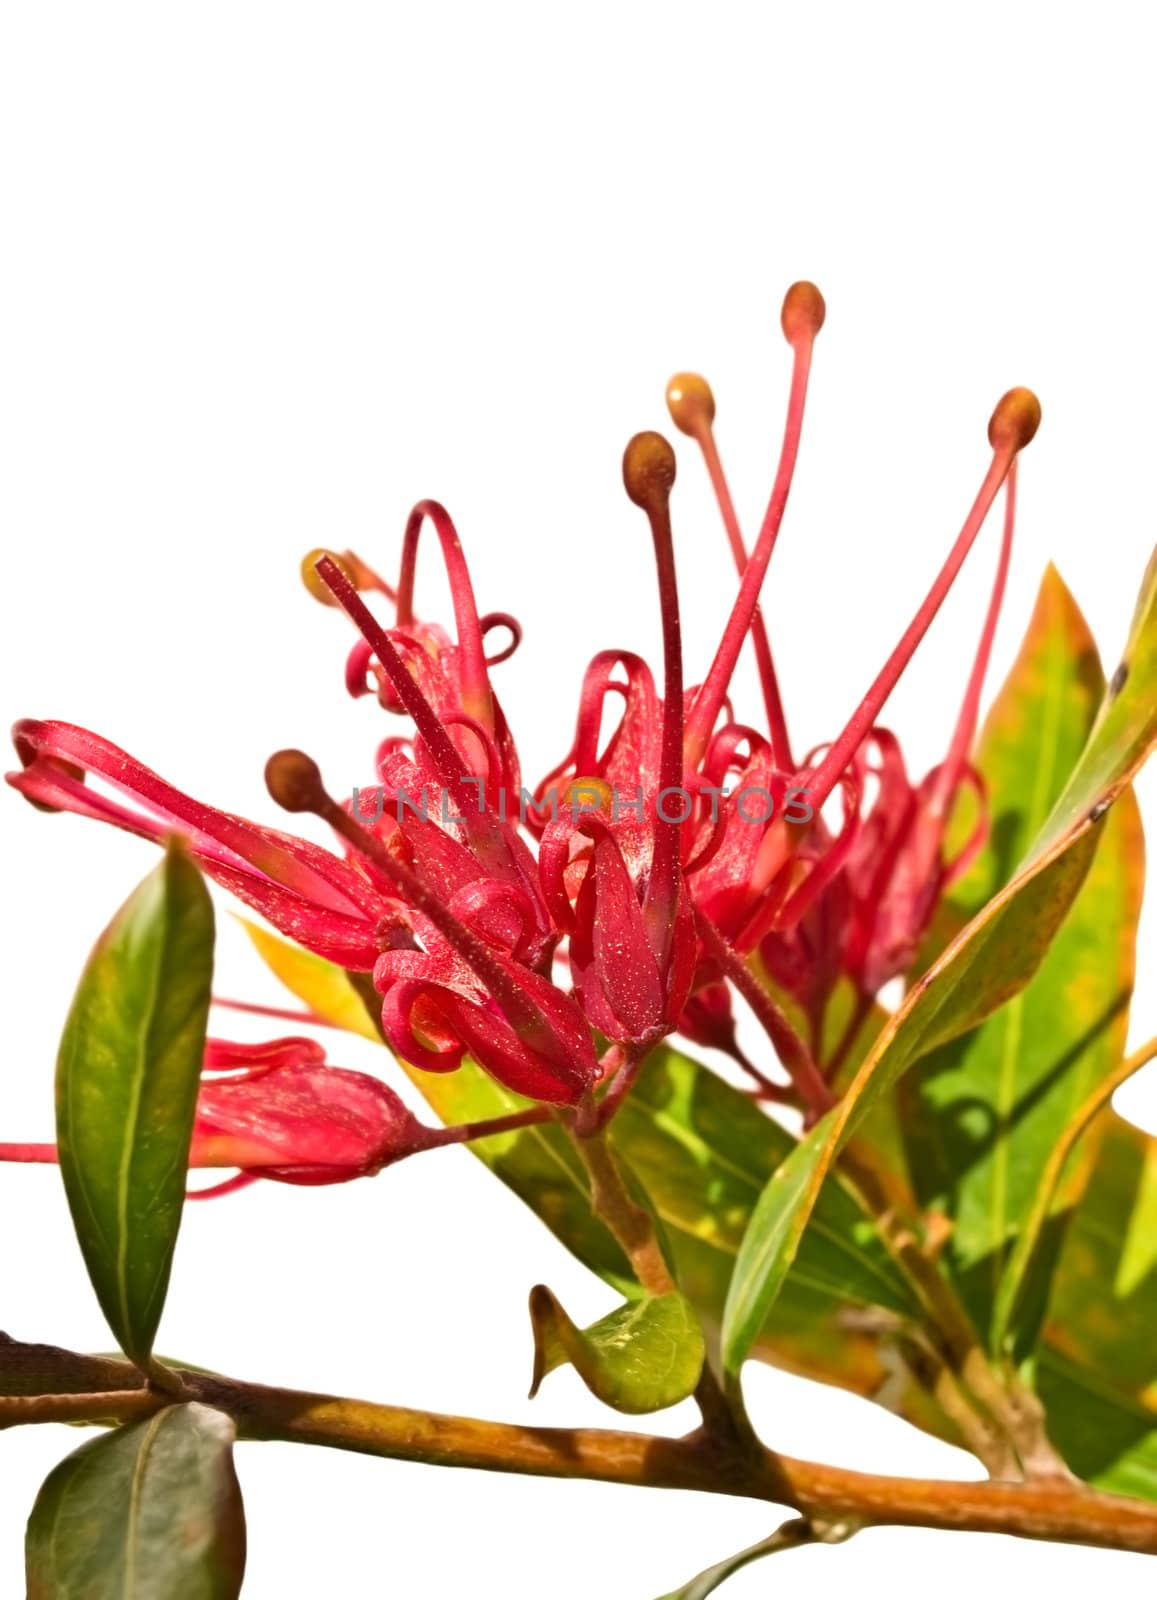 grevillea splendour Australian flower isolated by sherj